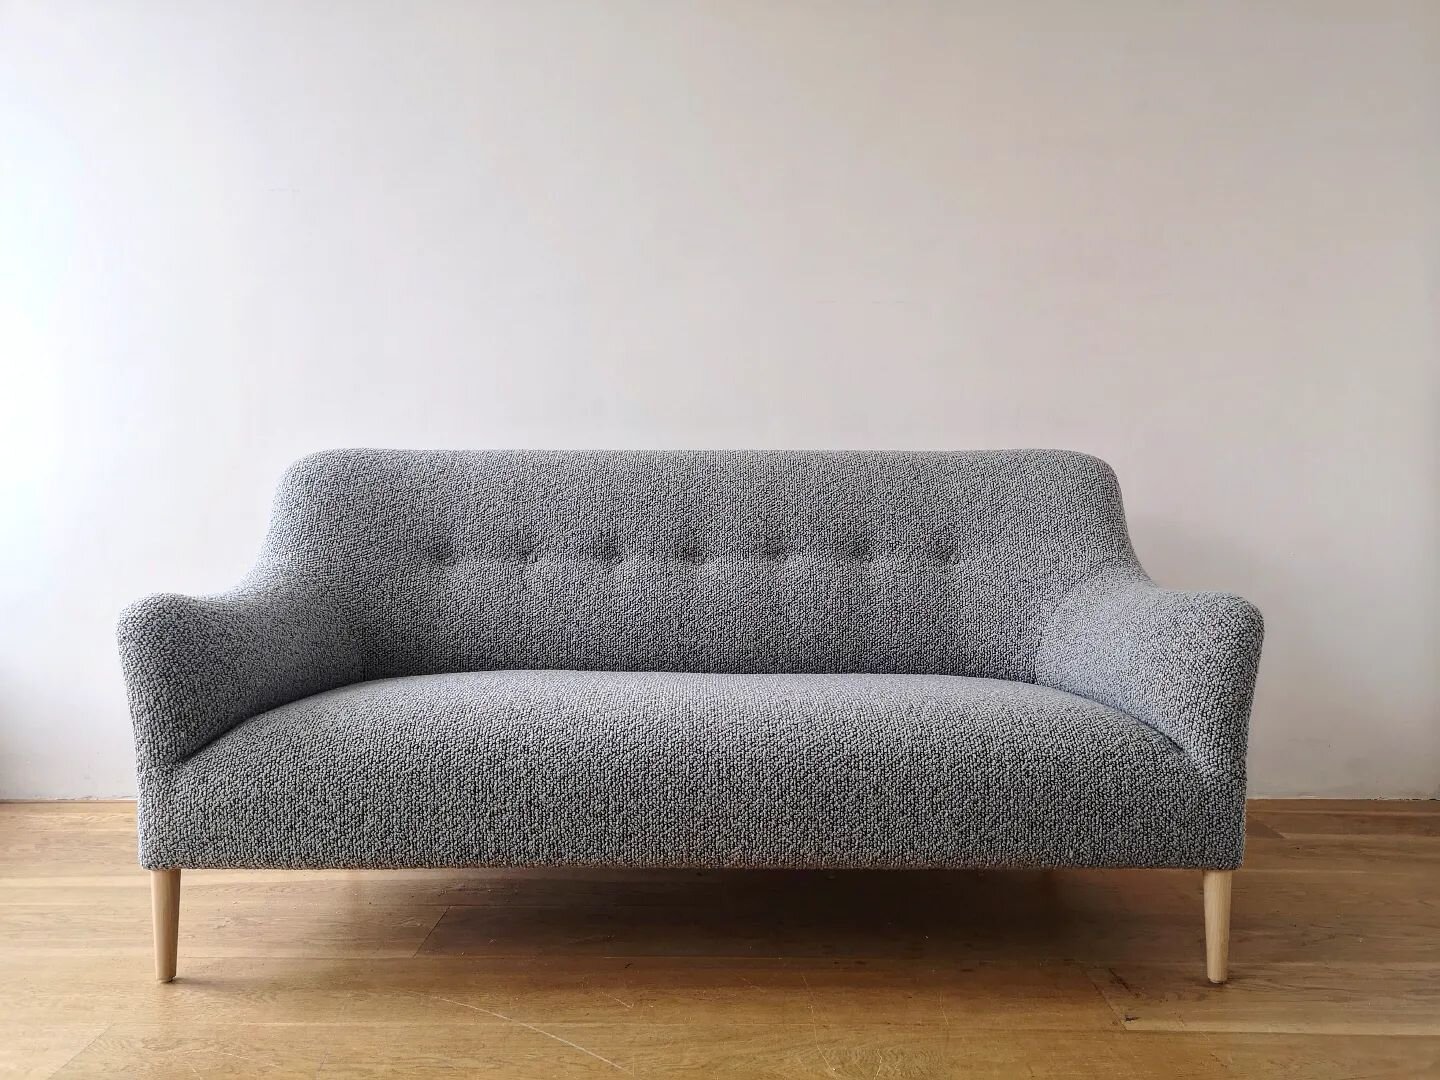 Carlton Sofa in Bute Storr fabric. Made to order 

#sofamanufacturer
#madeinleith
#madeinscotland
#upholsteryedinburgh
#upholsterersofinstagram
#butefabrics